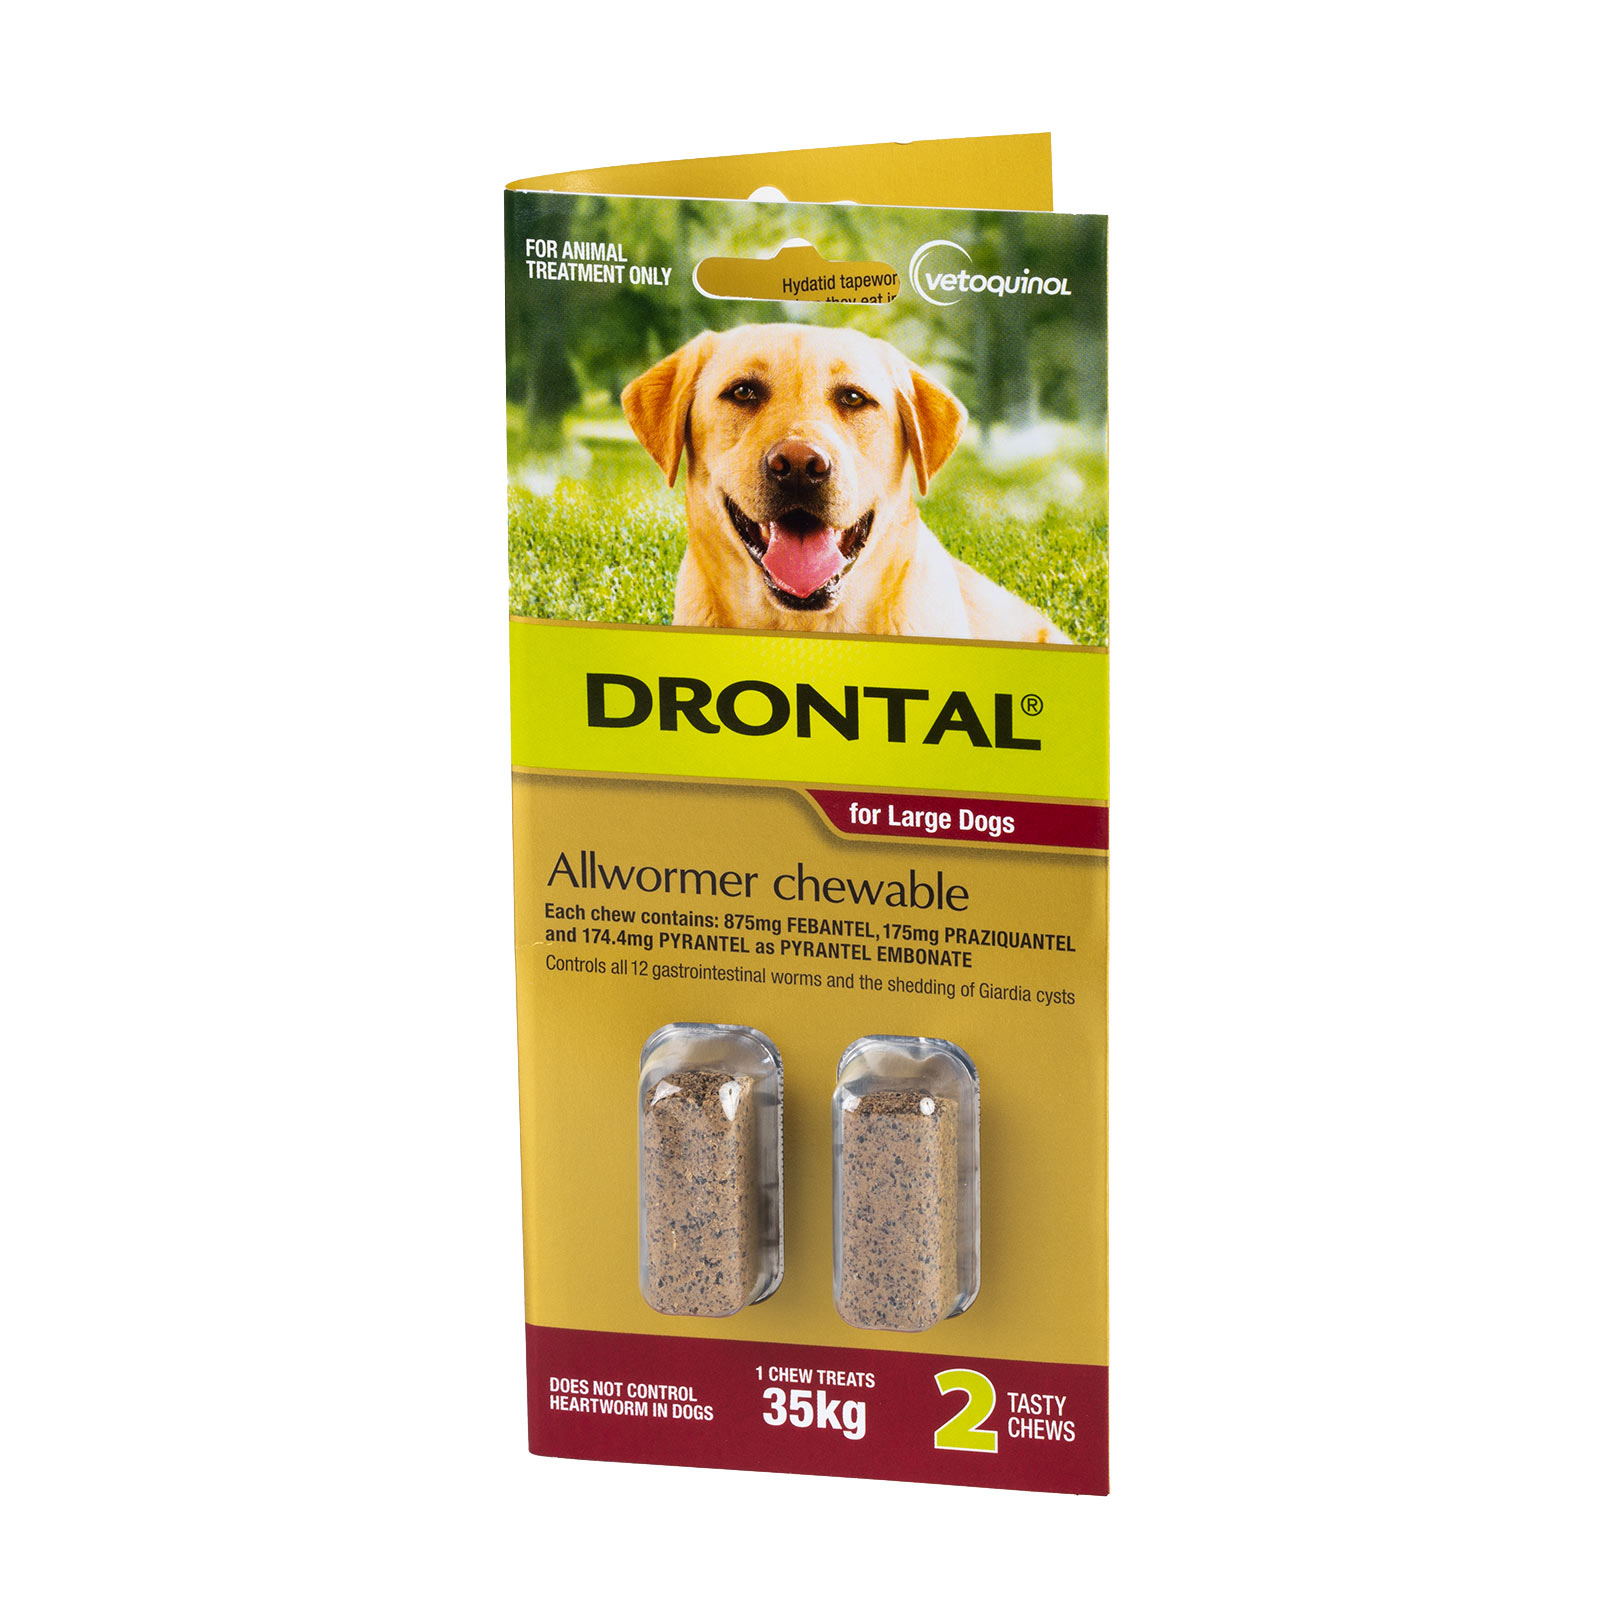 Drontal Allwormer Dogs 35kg x 2 Chews